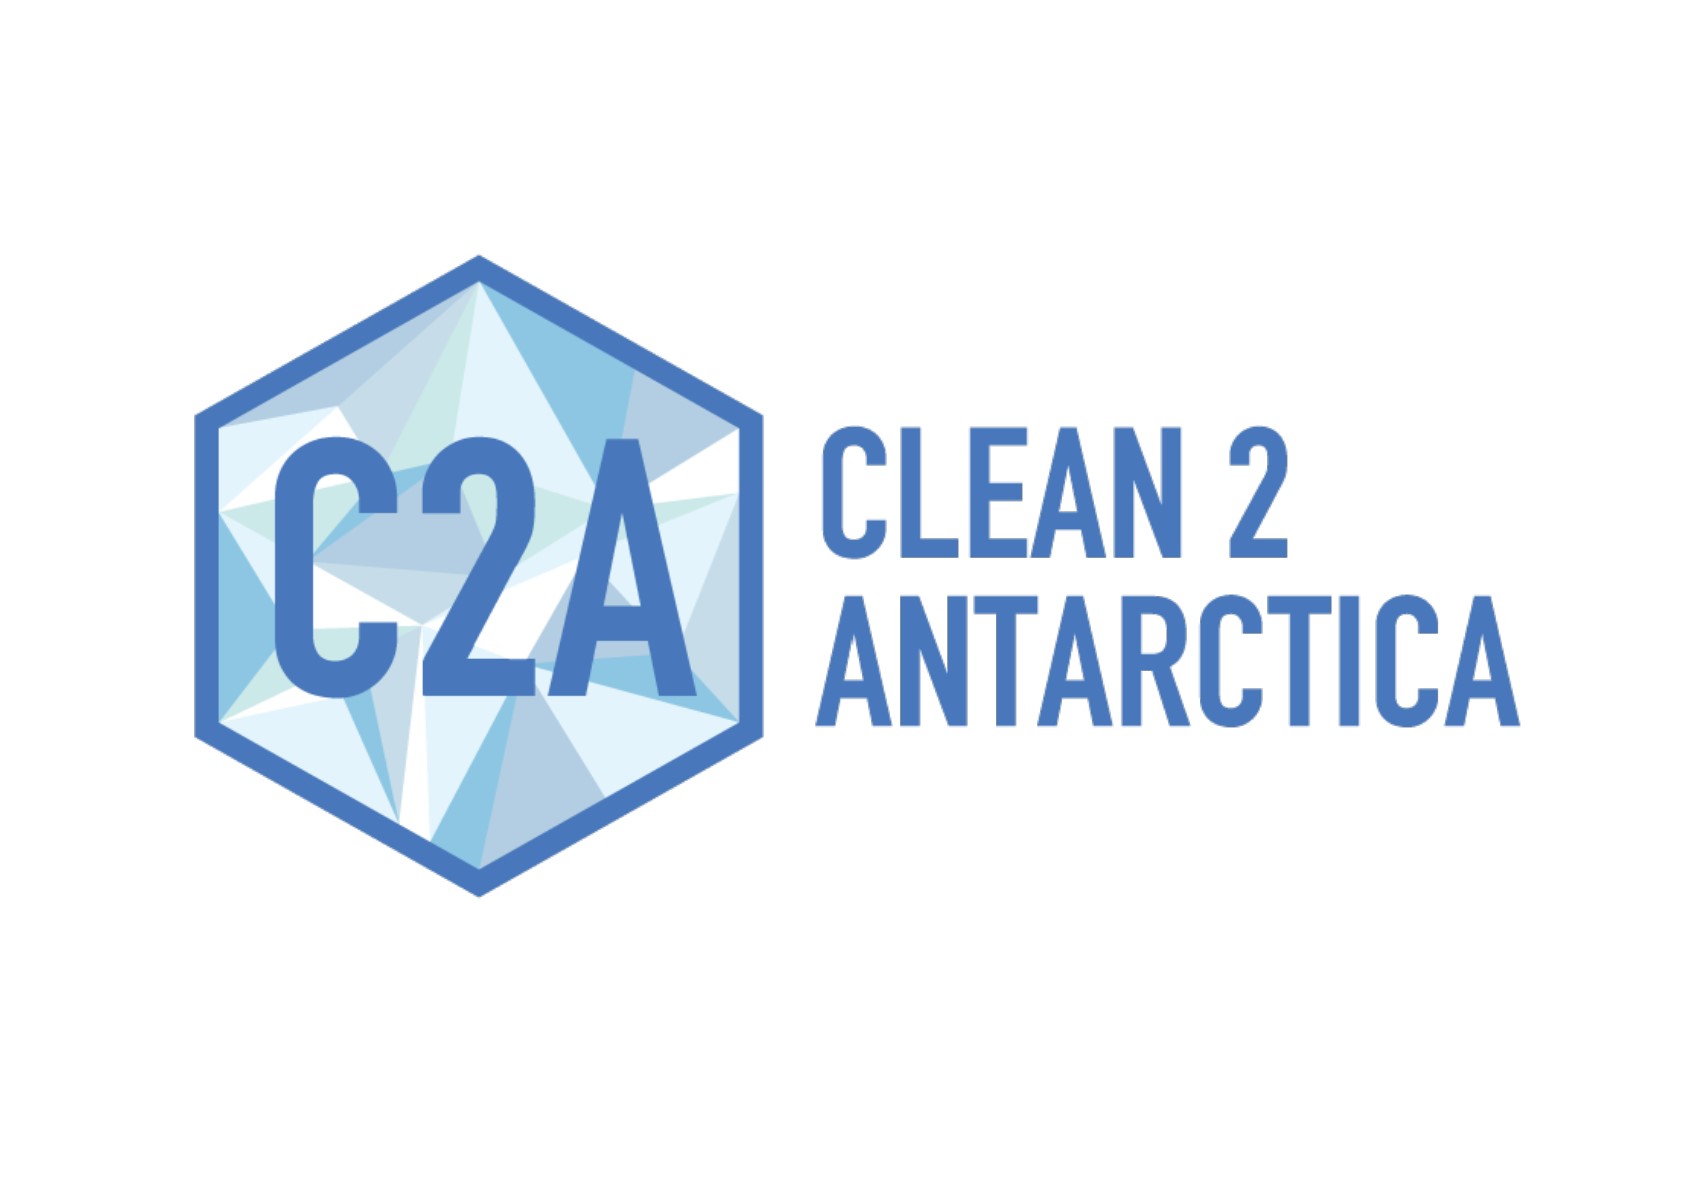 Clean2Antarctica